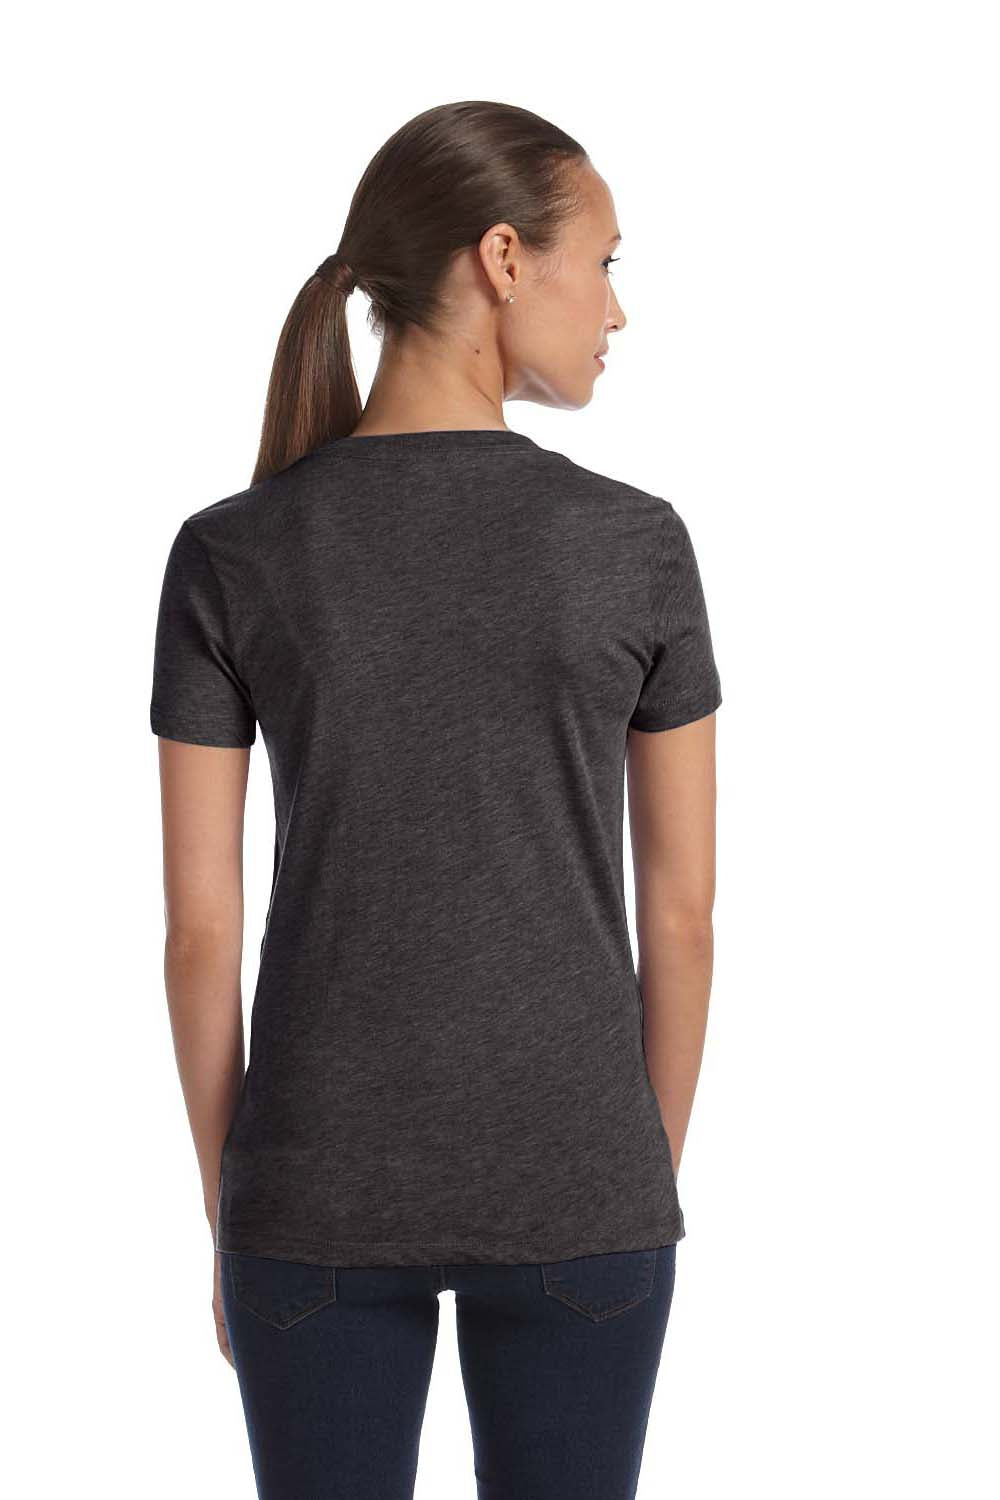 Bella + Canvas 8435 Womens Short Sleeve Deep V-Neck T-Shirt Heather Charcoal Grey Back